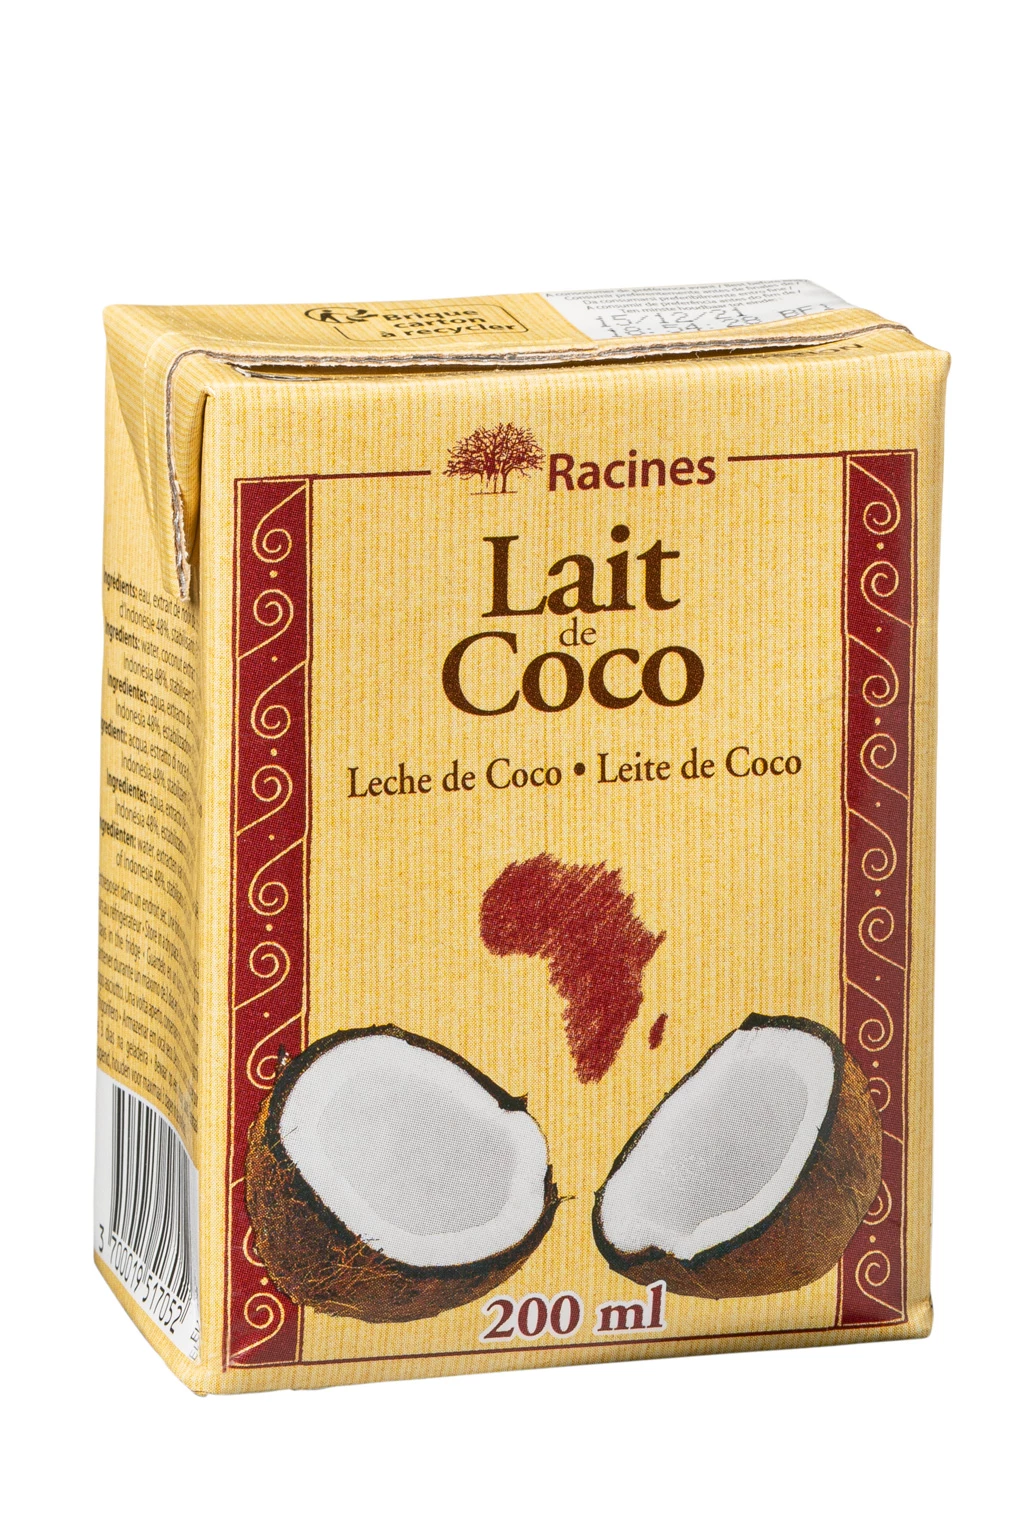 Coconut Milk (24 X 200 Ml) Tetrapack - Racines